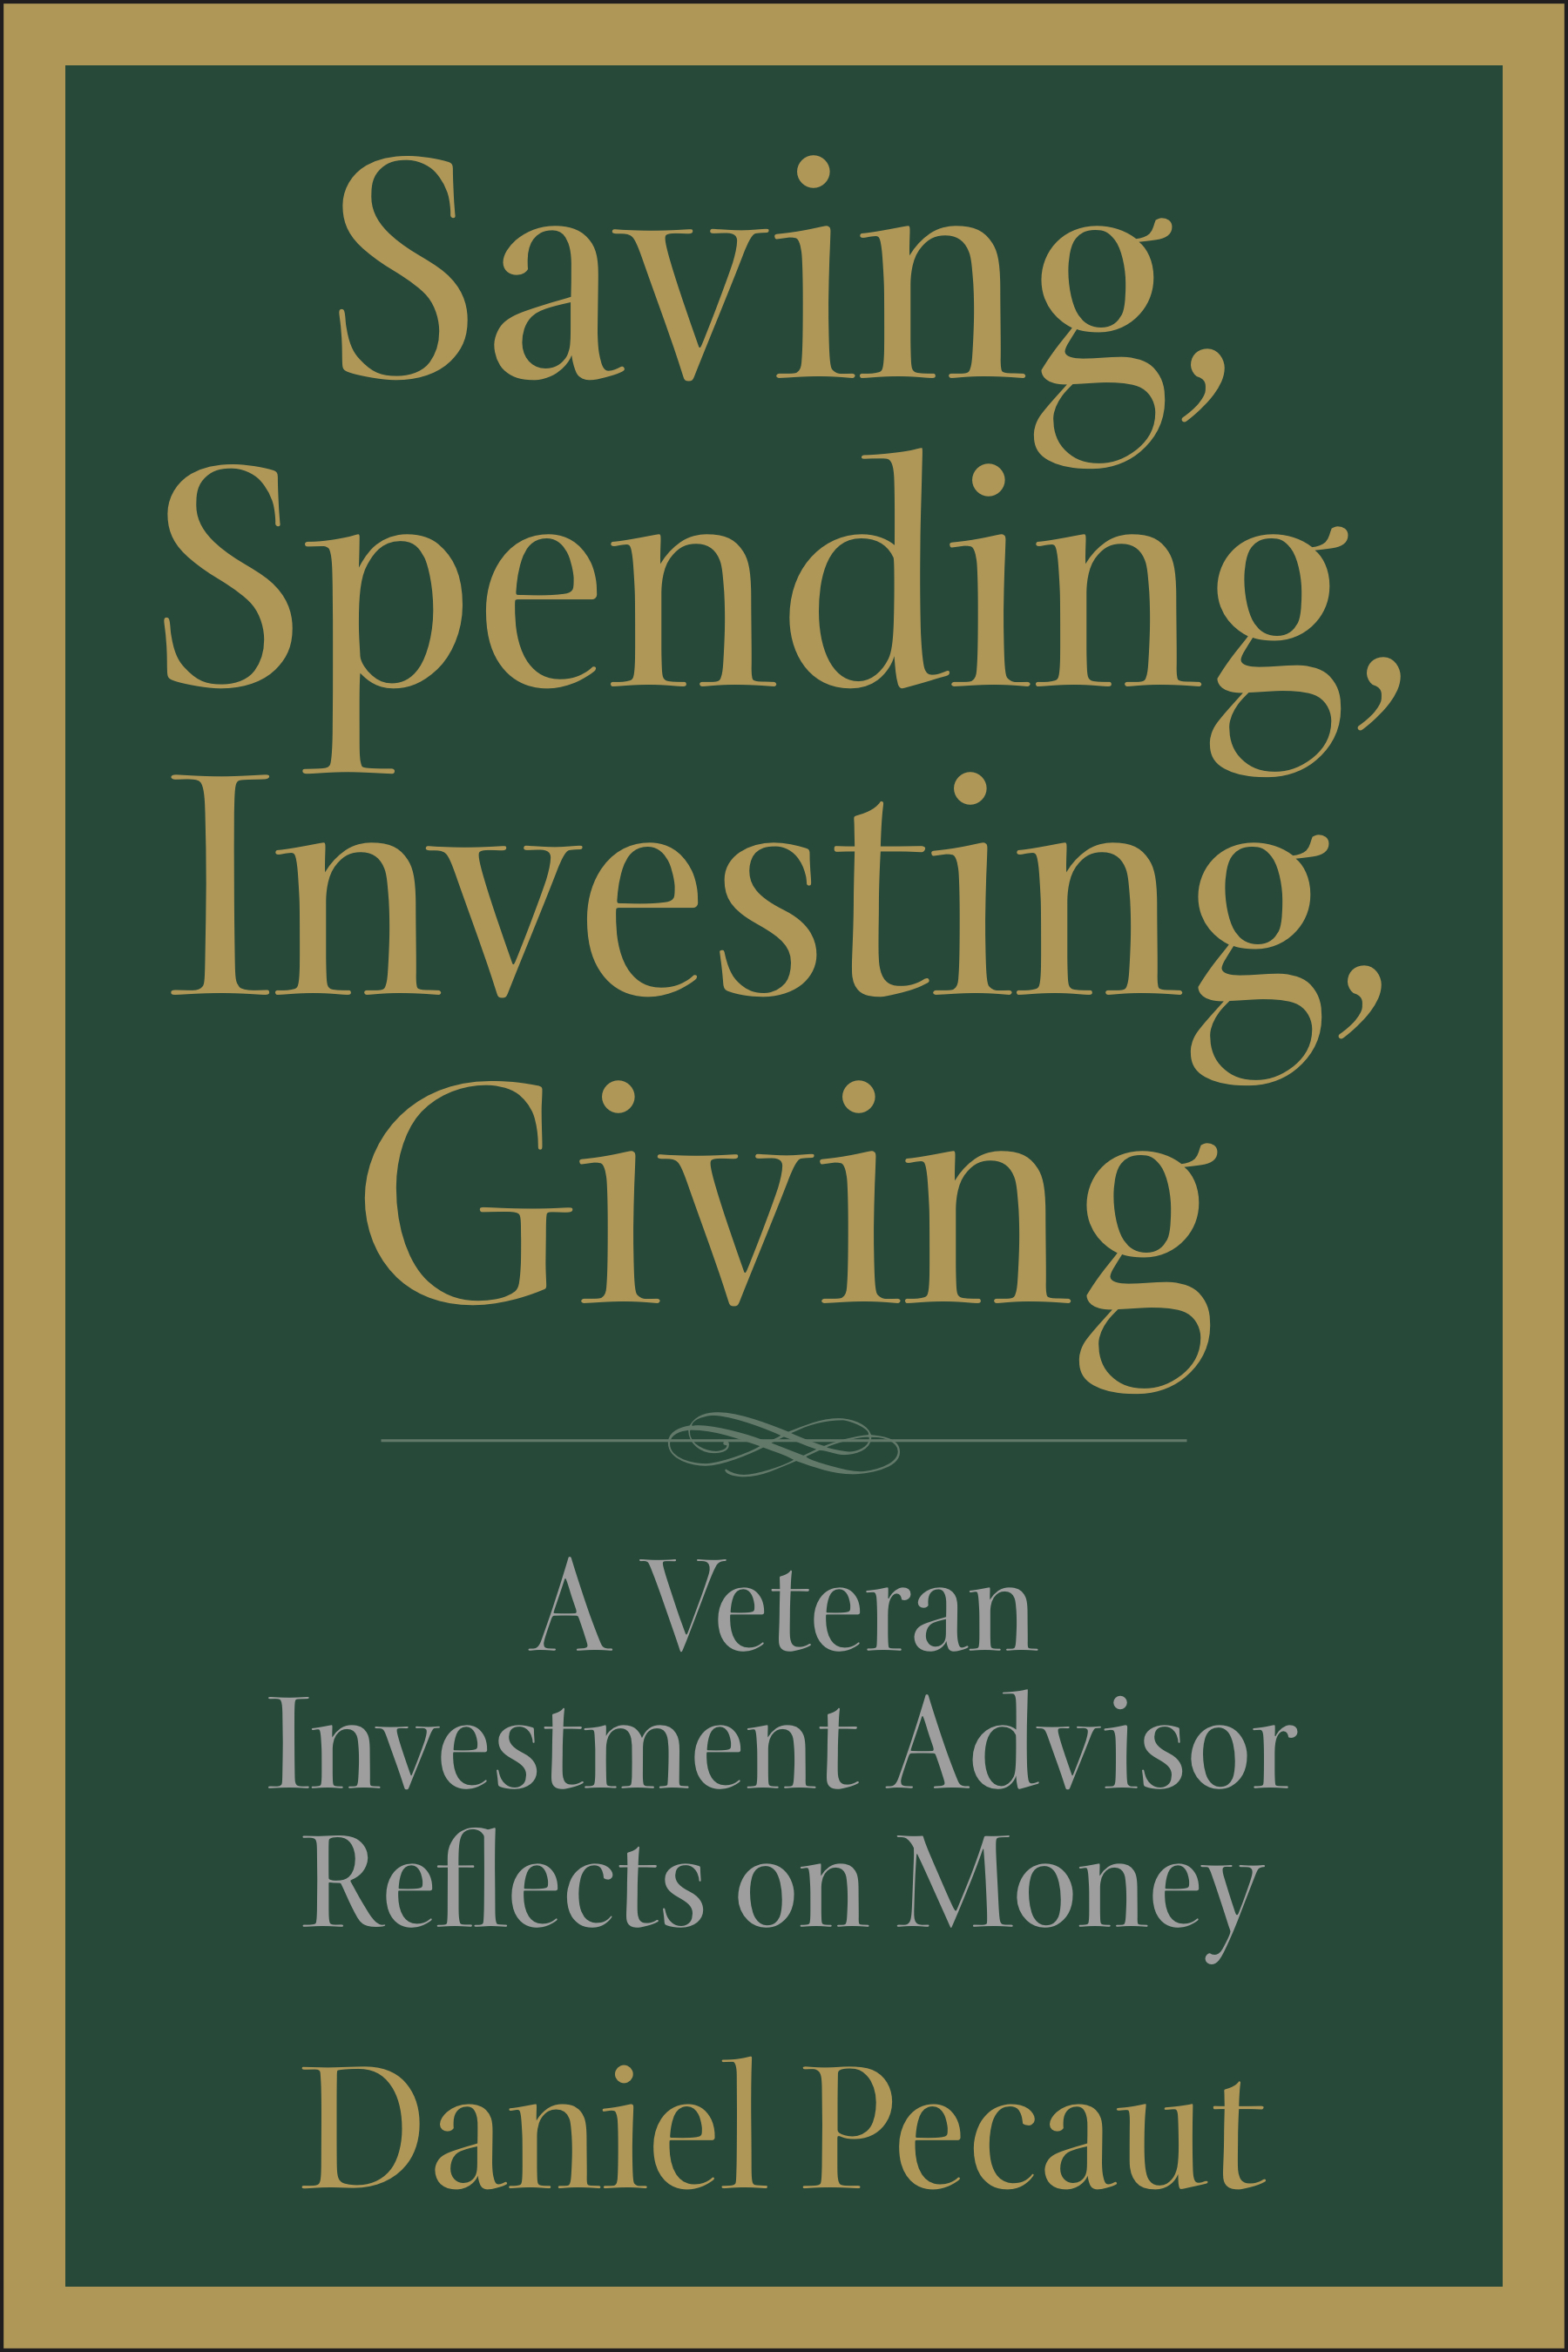 FREE: Saving, Spending, Investing, Giving: A Veteran Investment Advisor Reflects on Money by Daniel Pecaut